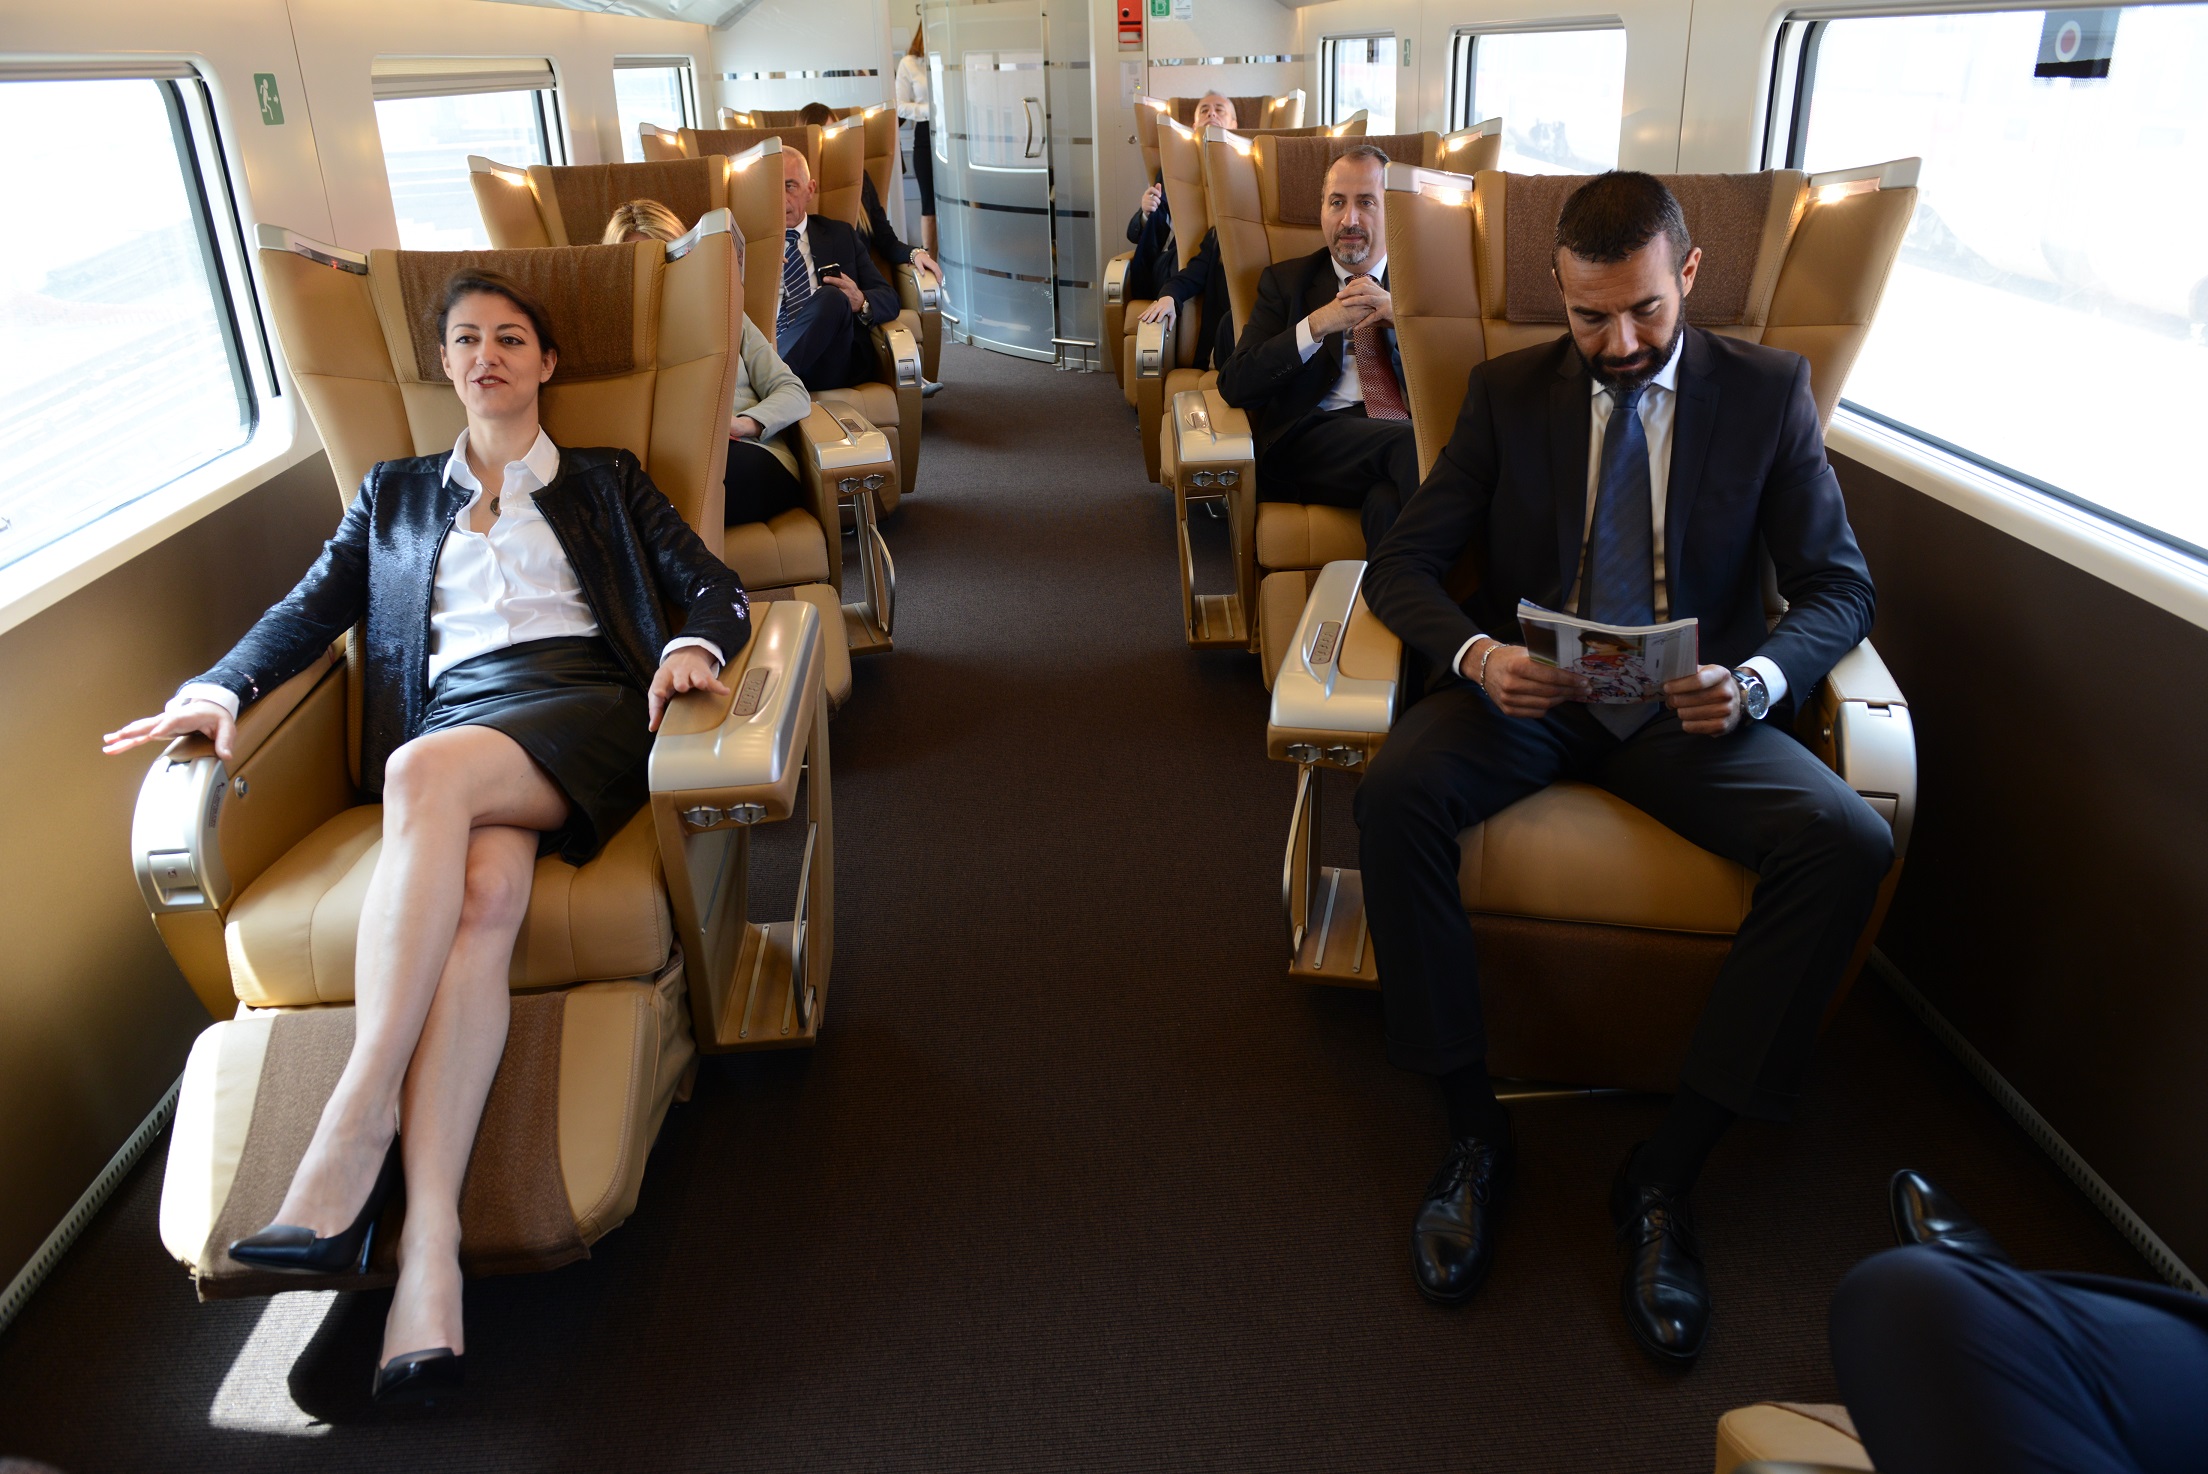 Trenitalia's Italian journeys now available via Rail Online - Travel Weekly